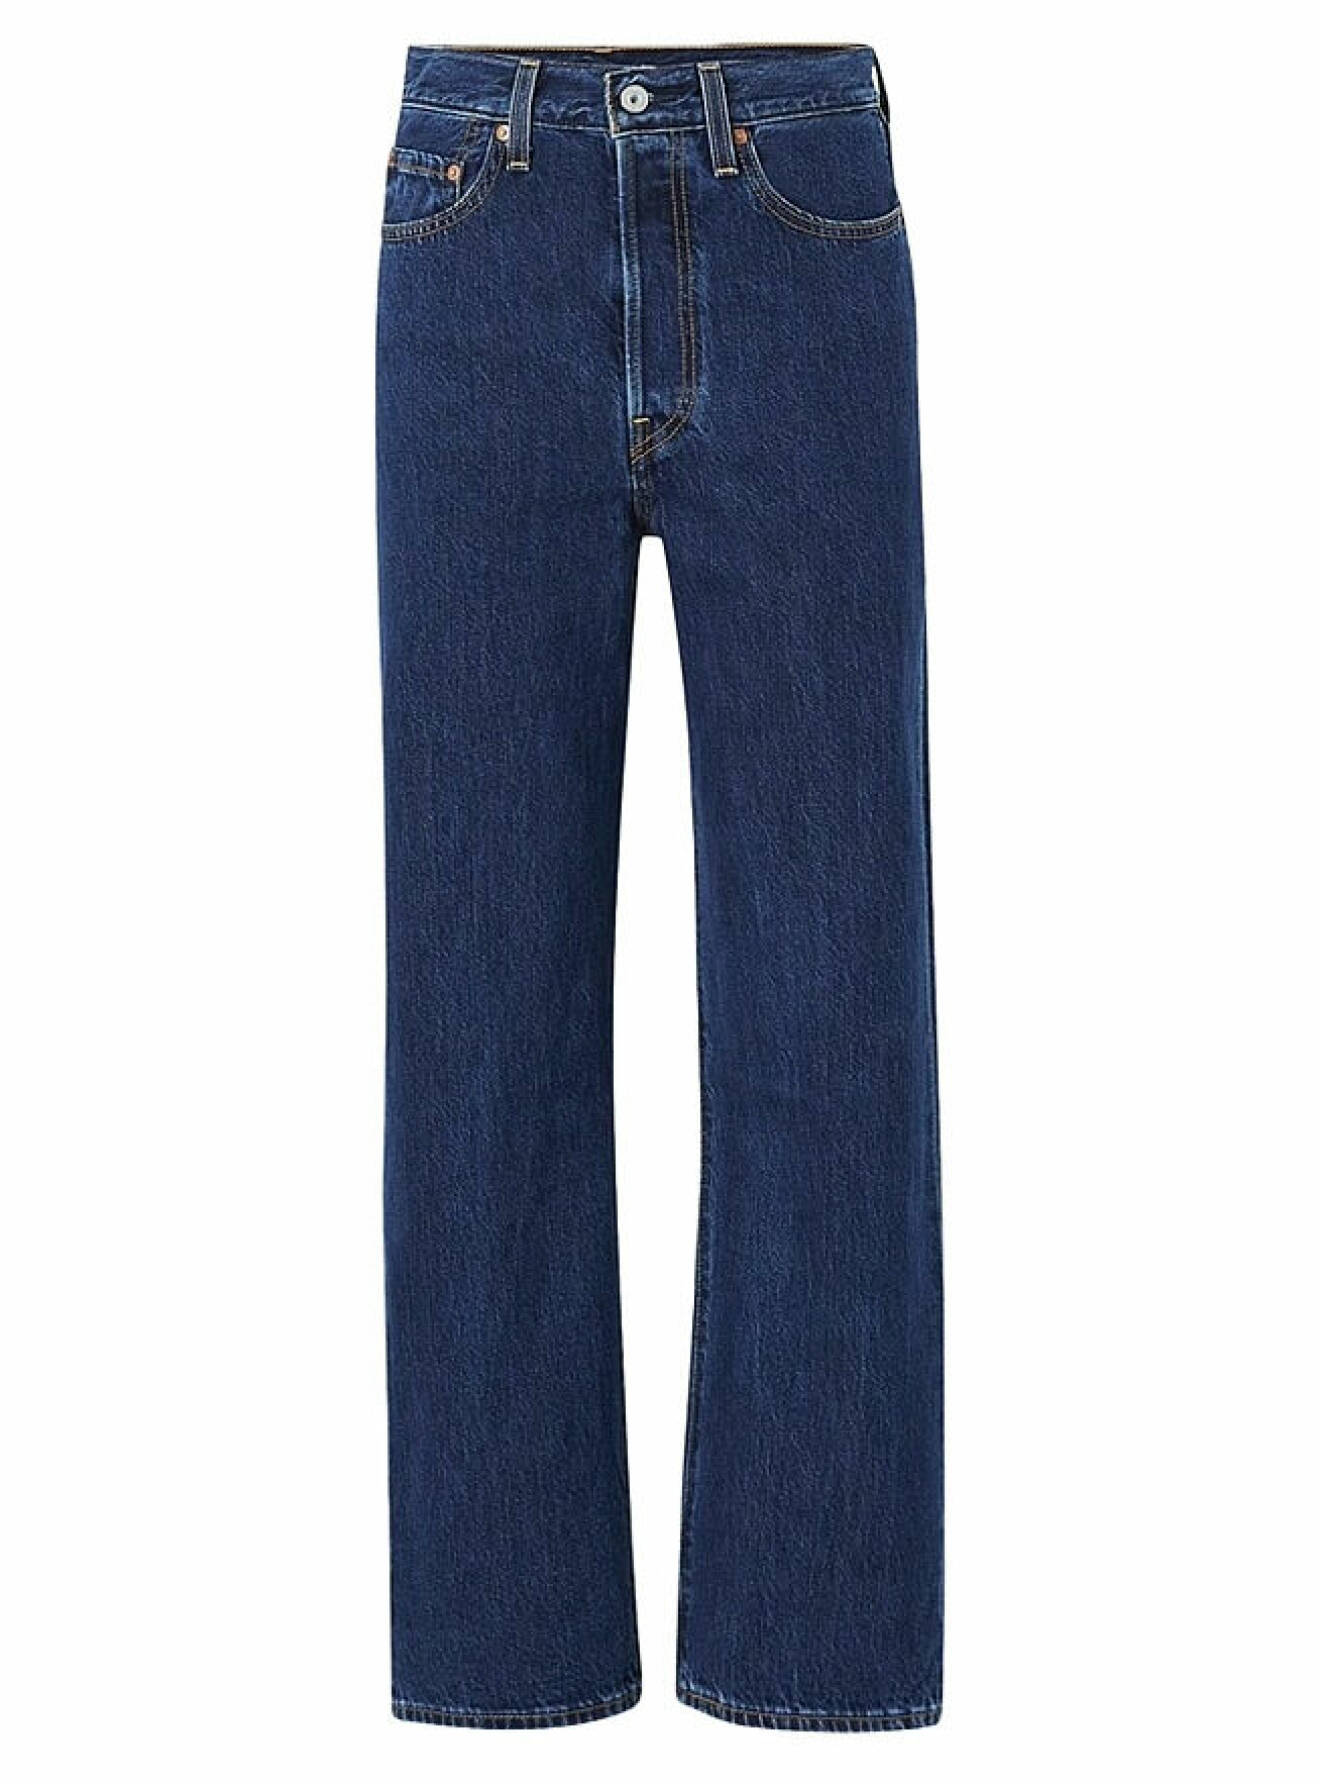 jeans från levis dam